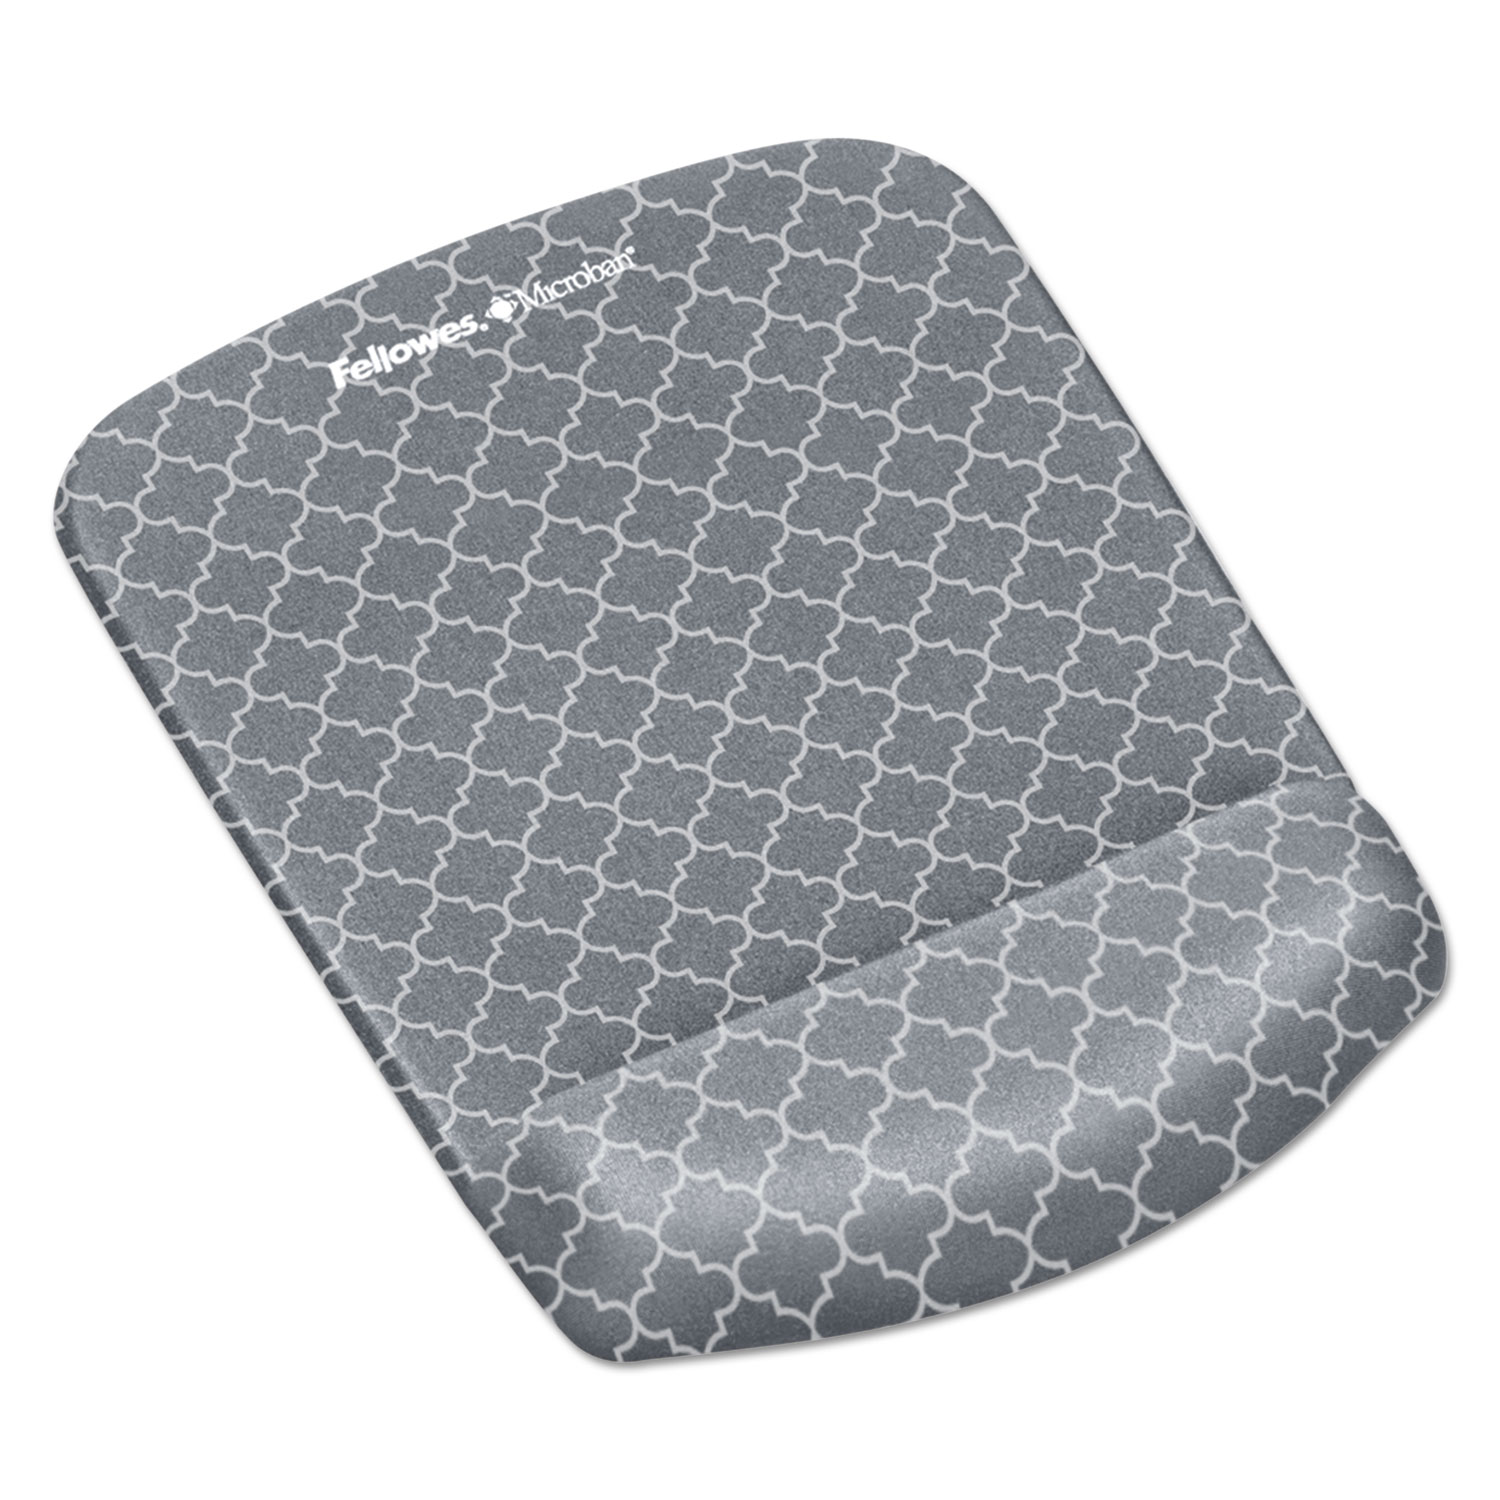 PlushTouch Mouse Pad with Wrist Rest, 7 1/4 x 9 3/8 x 1, Gray/White Lattice